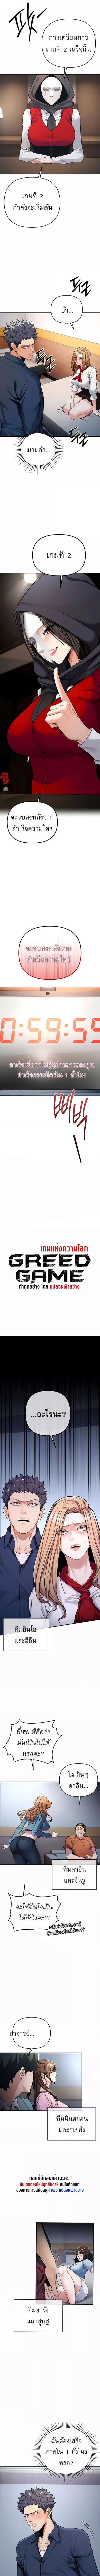 Greed Game 7 01